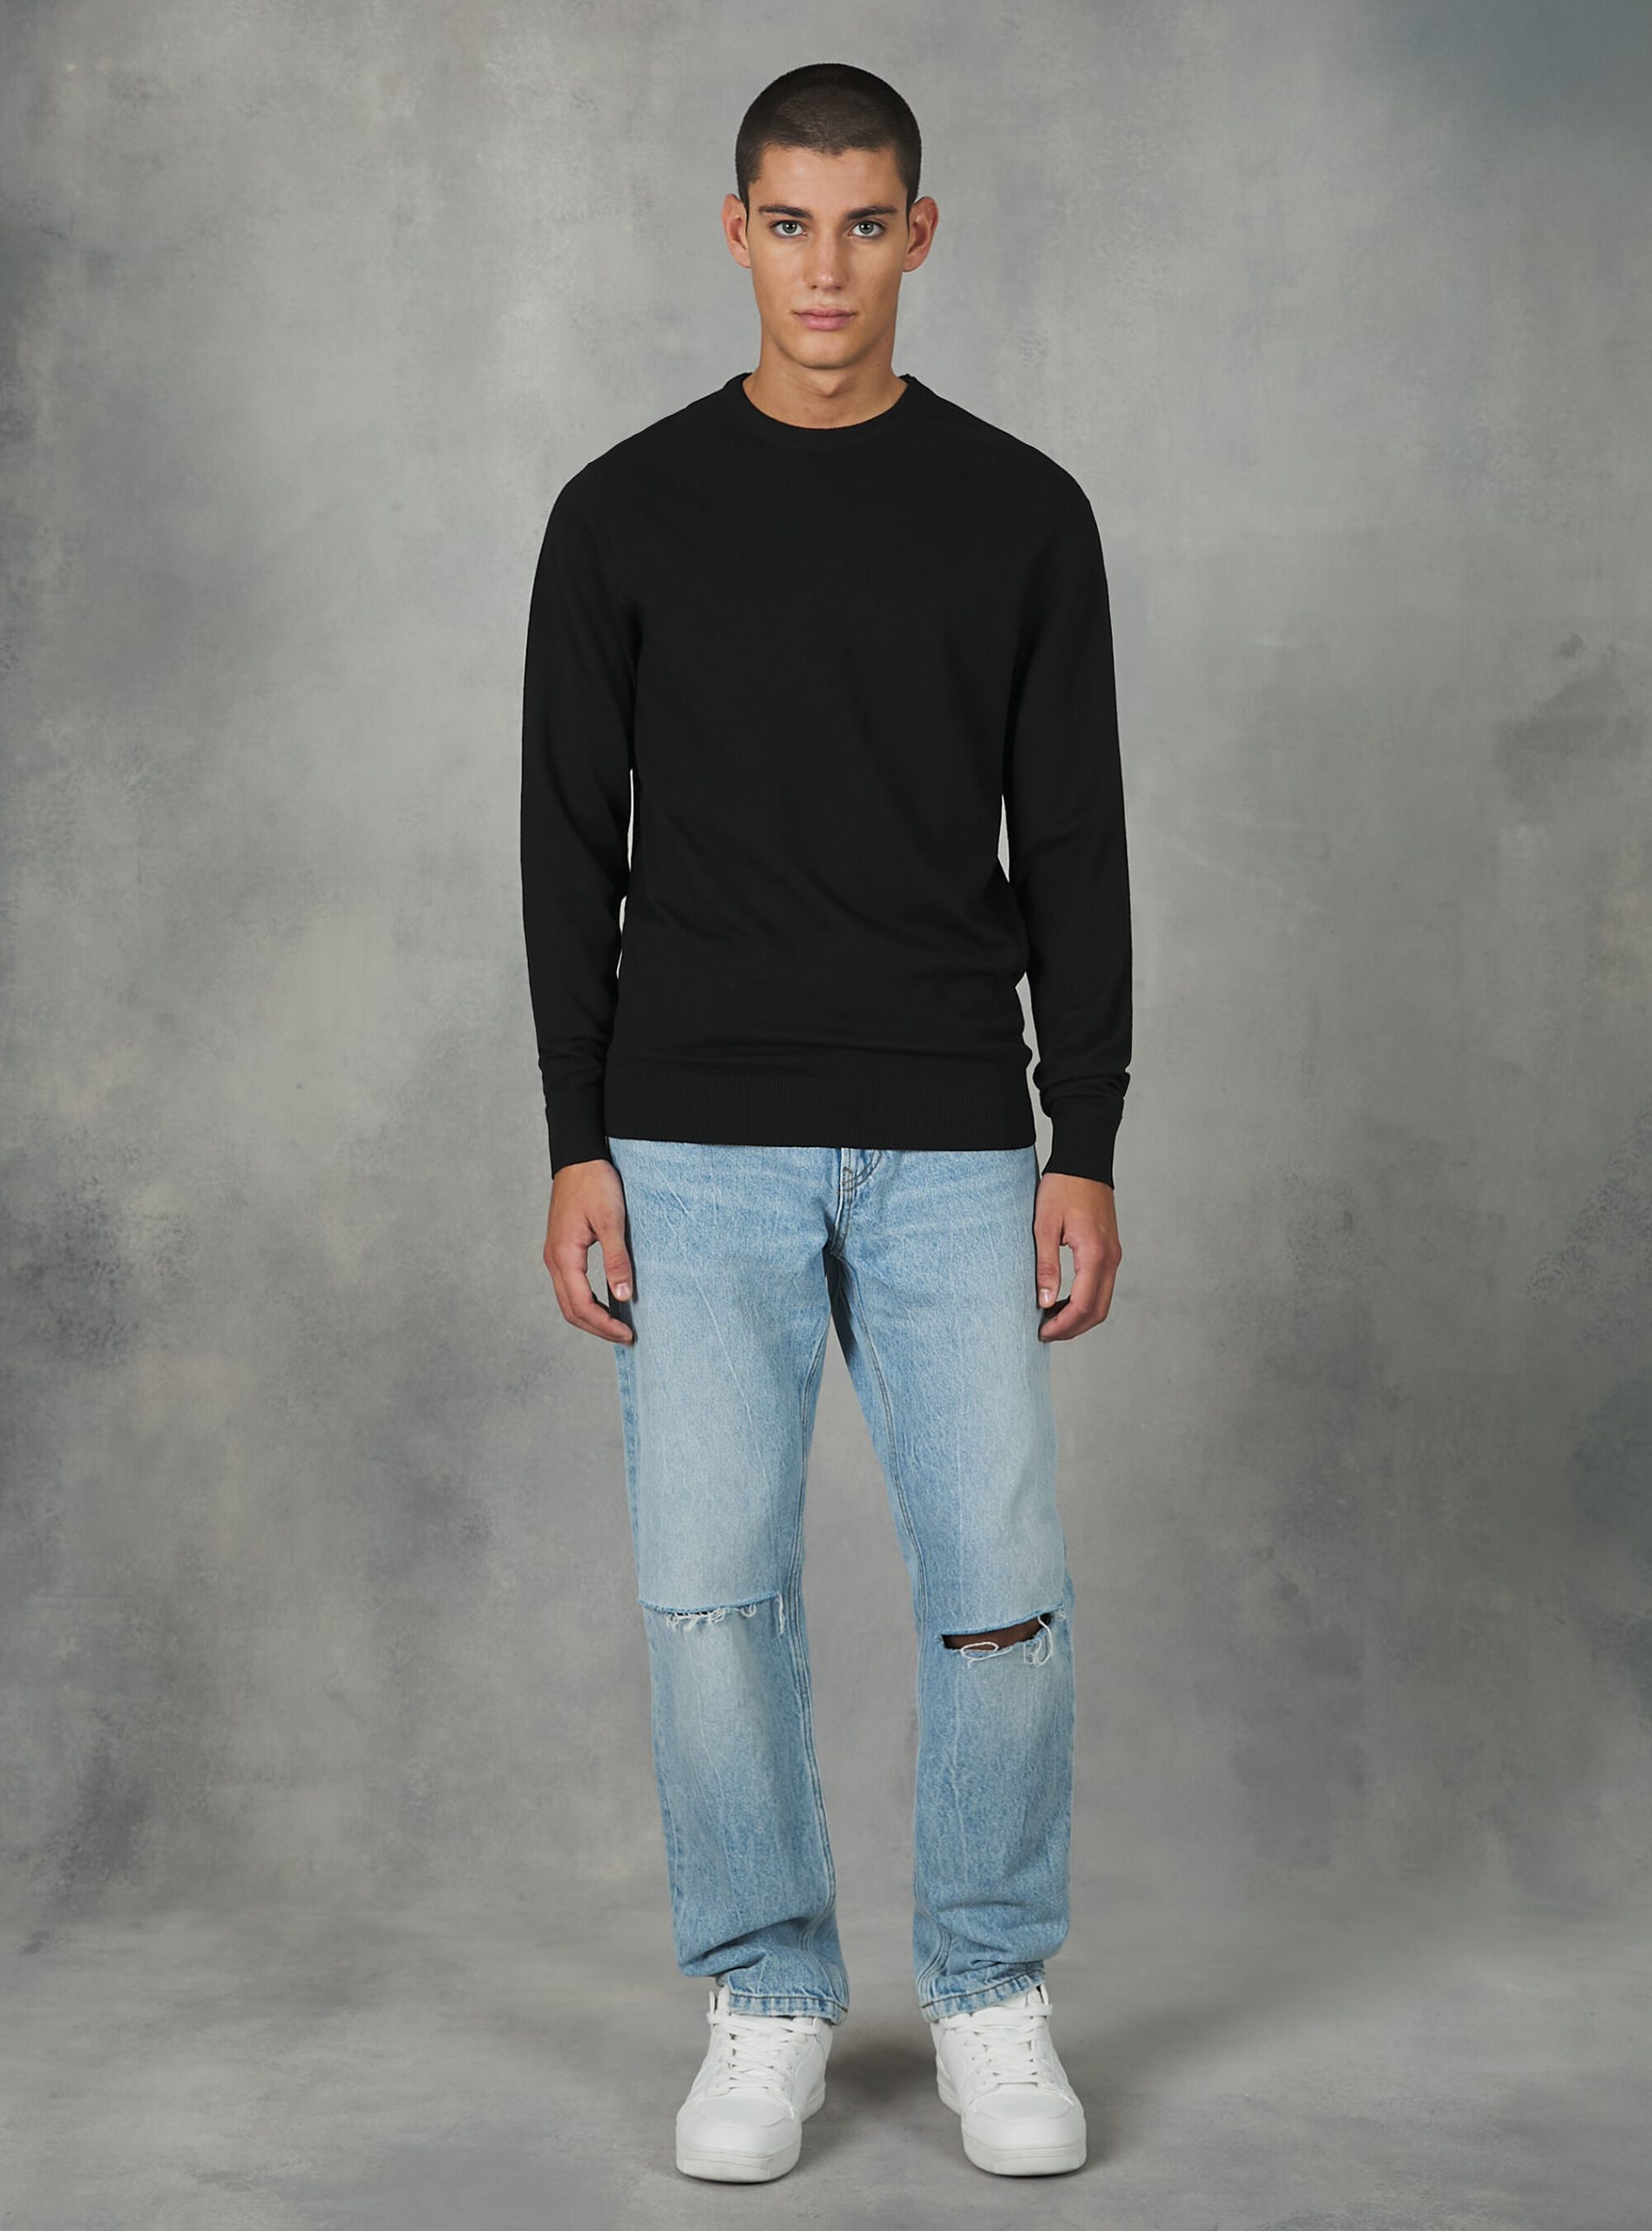 Round-Neck Pullover Made Of Sustainable Viscose Ecovero Produkt Alcott Männer Strickwaren Bk1 Black – 1